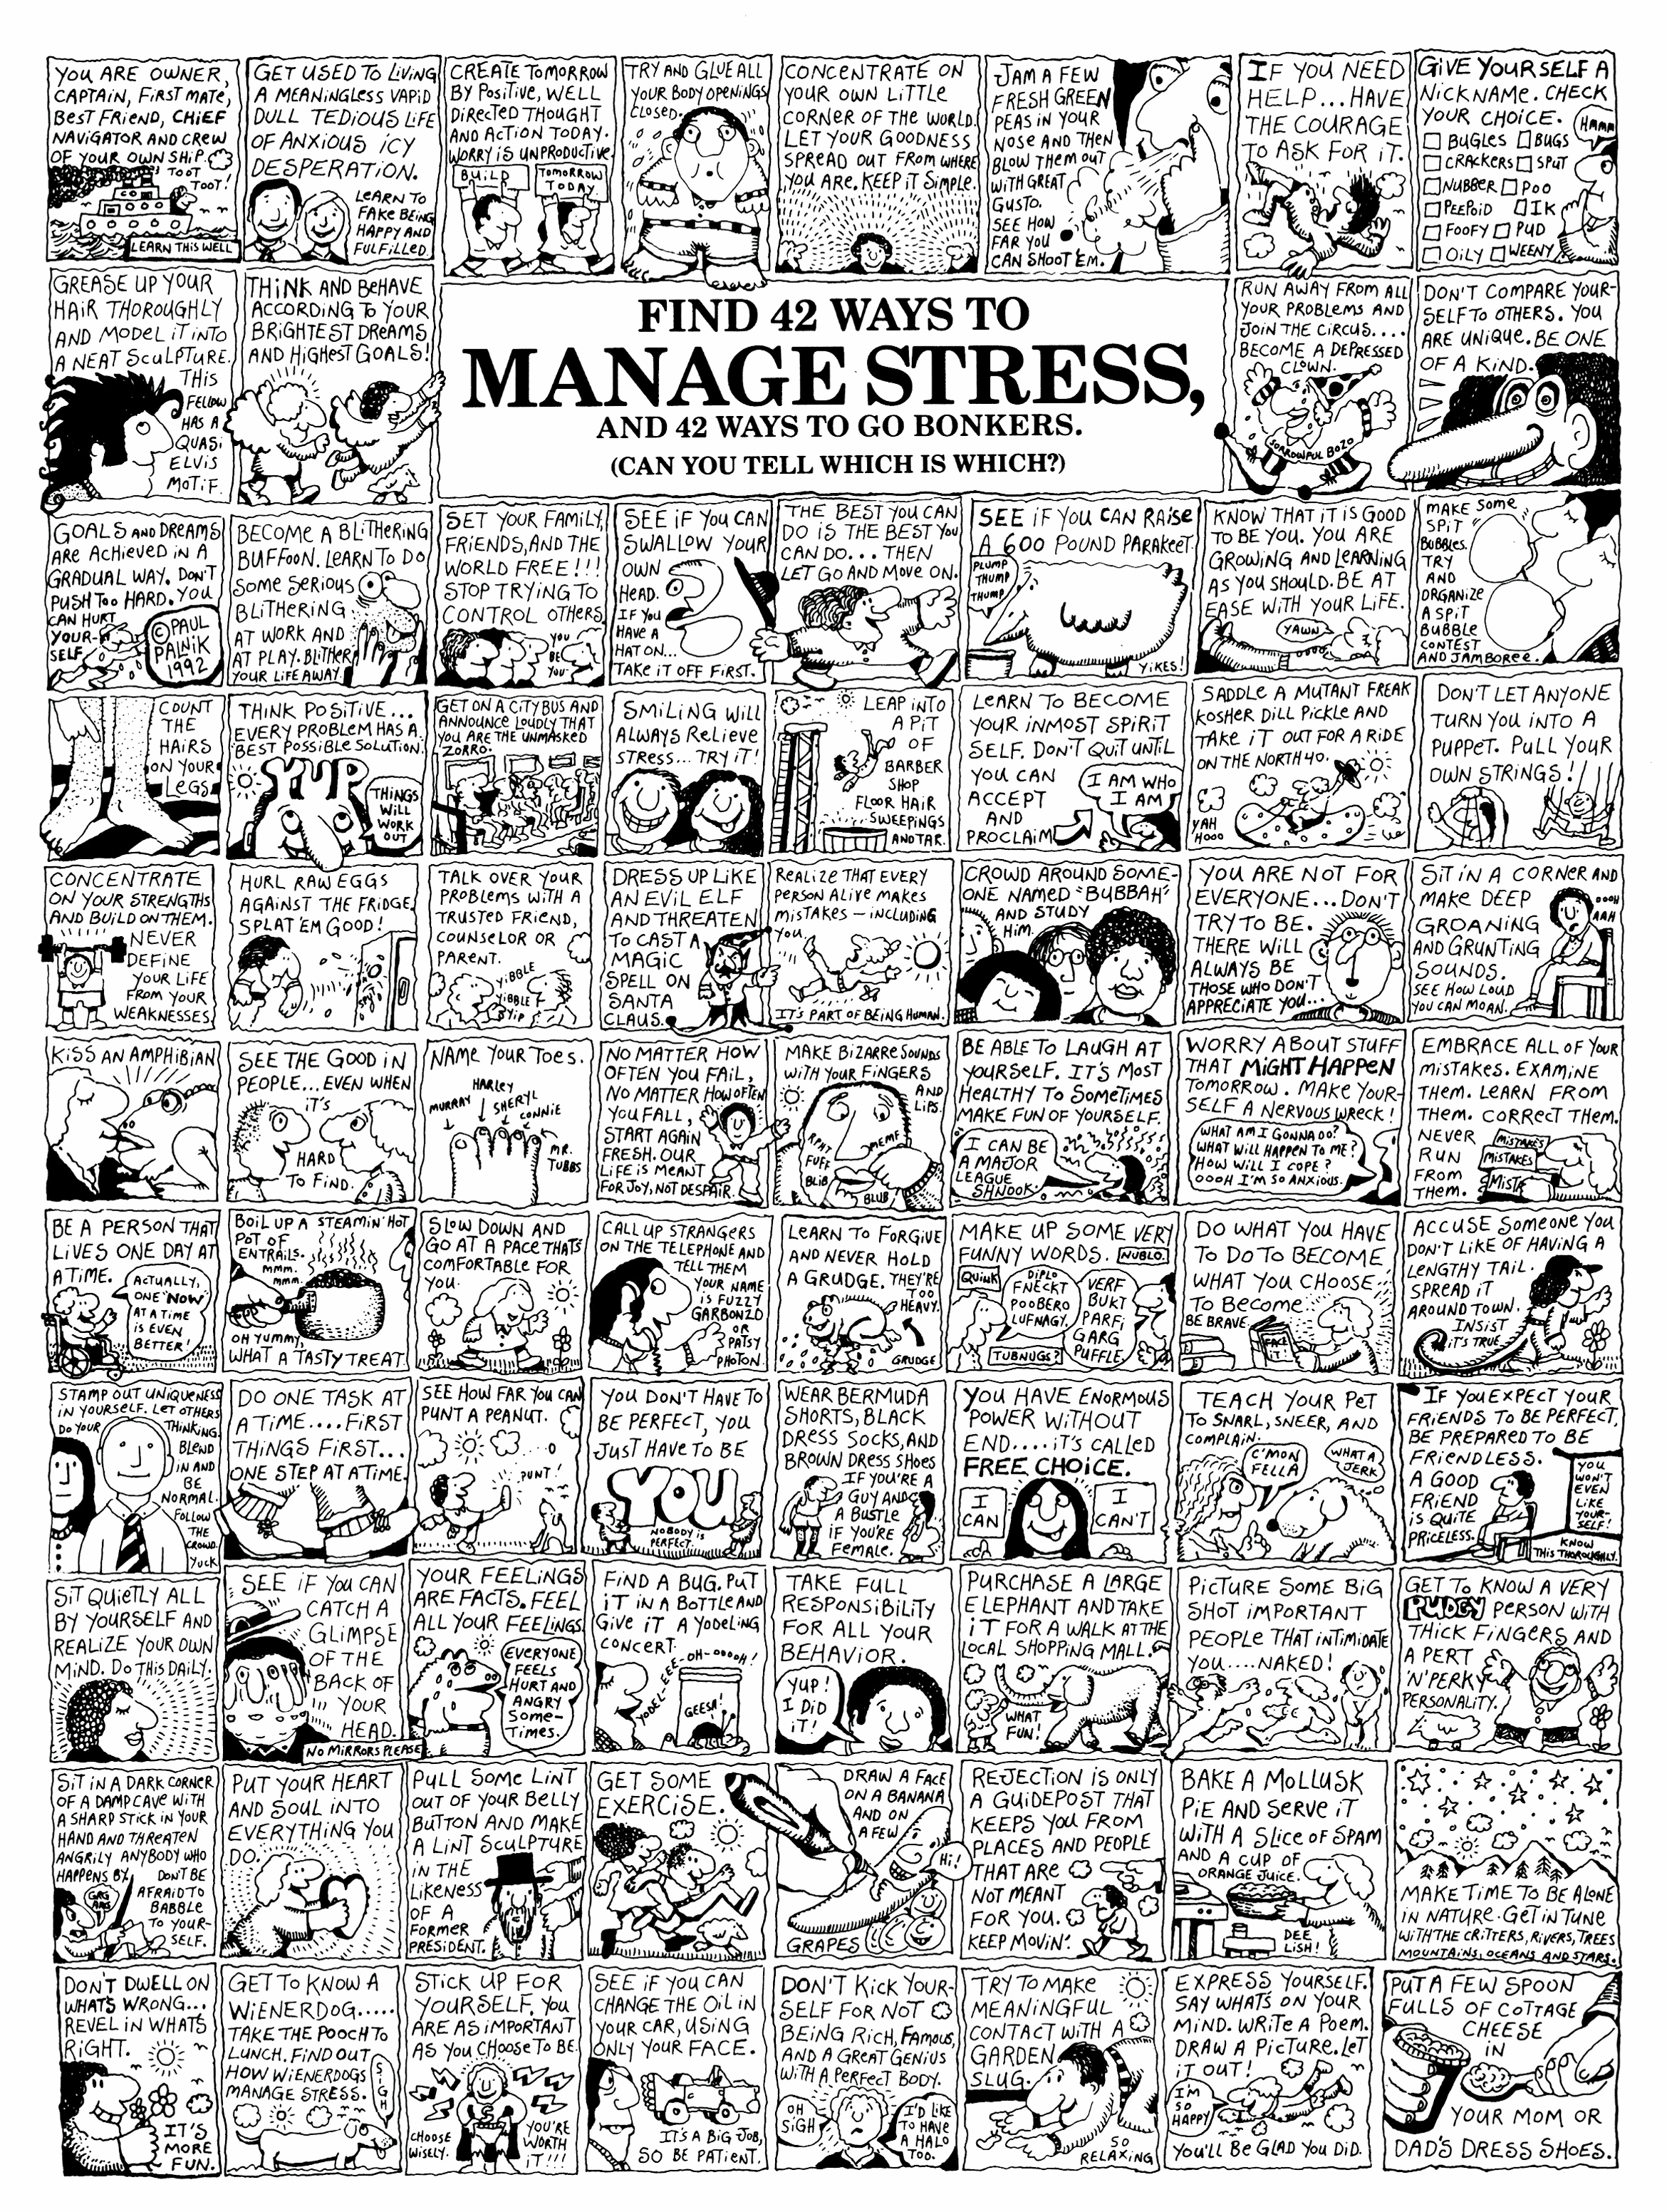 Manage Stress - Paul Palnik.png